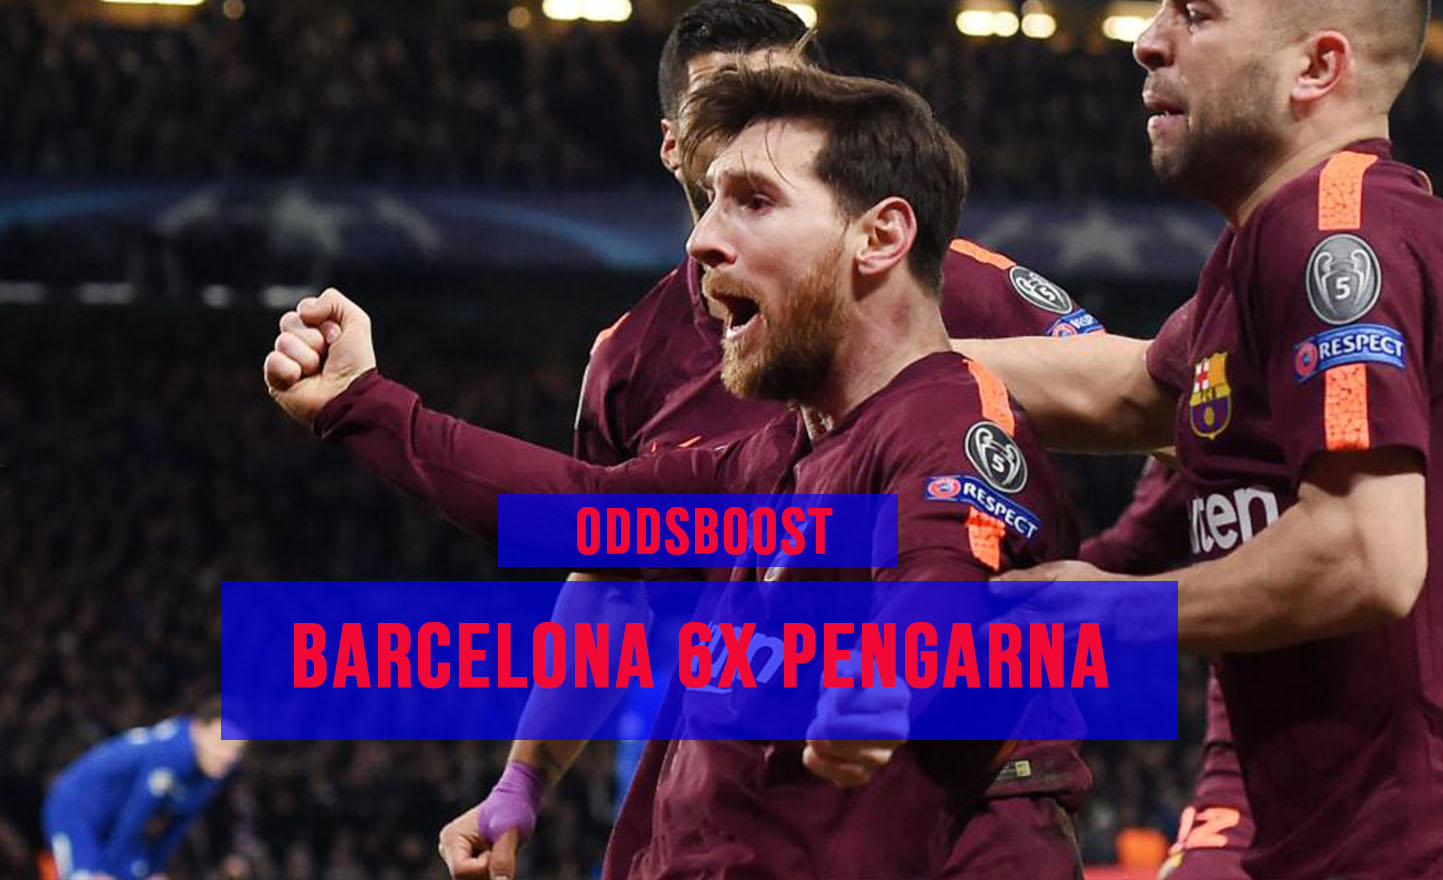 Barcelona oddsboost 6x